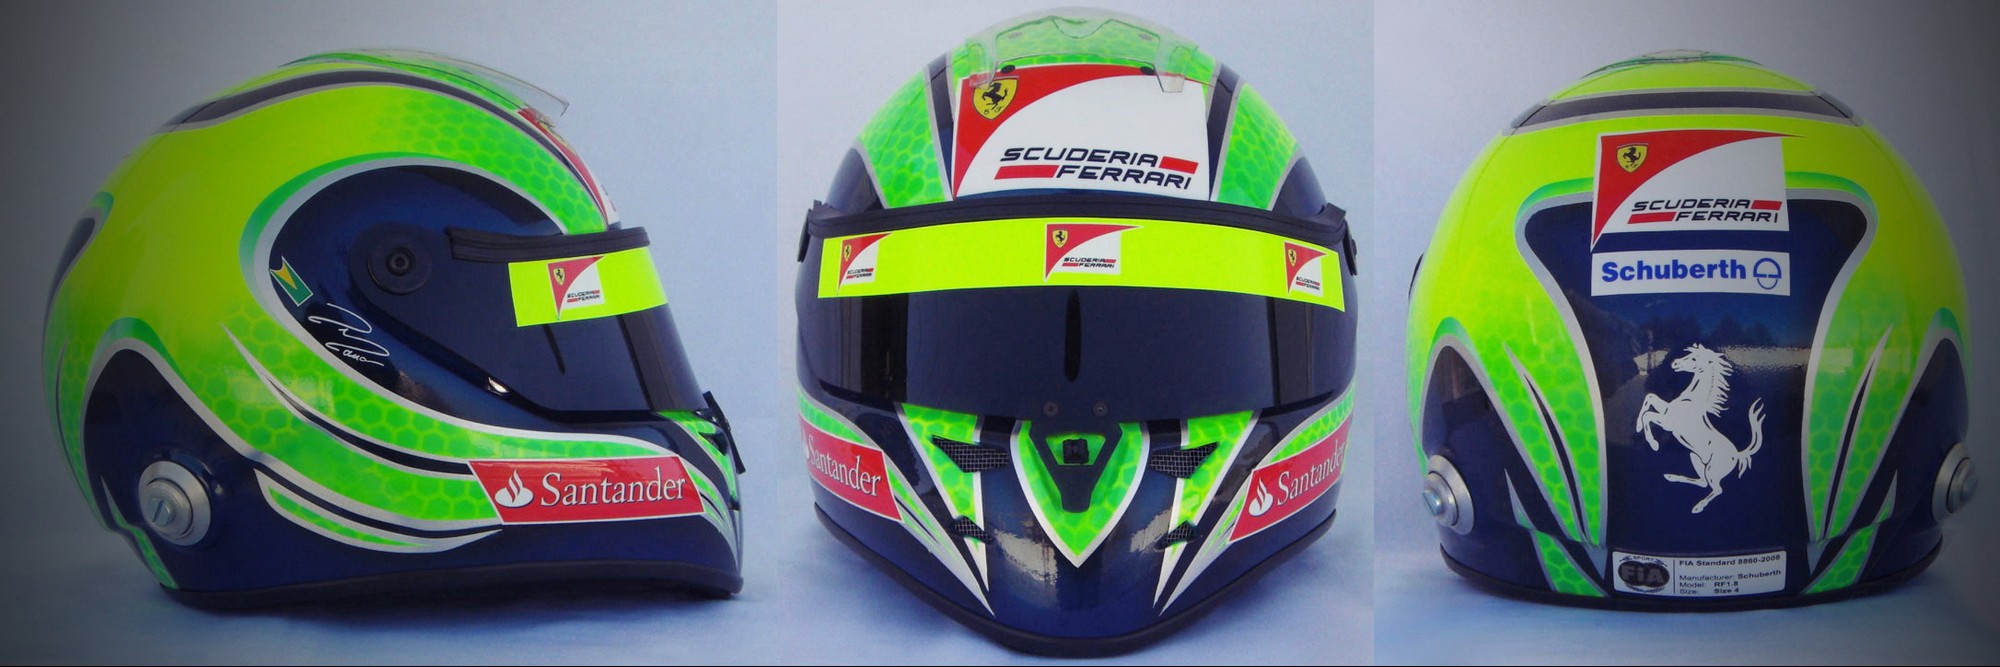 Шлем Фелипе Массы на сезон 2011 года | 2011 helmet of Felipe Massa